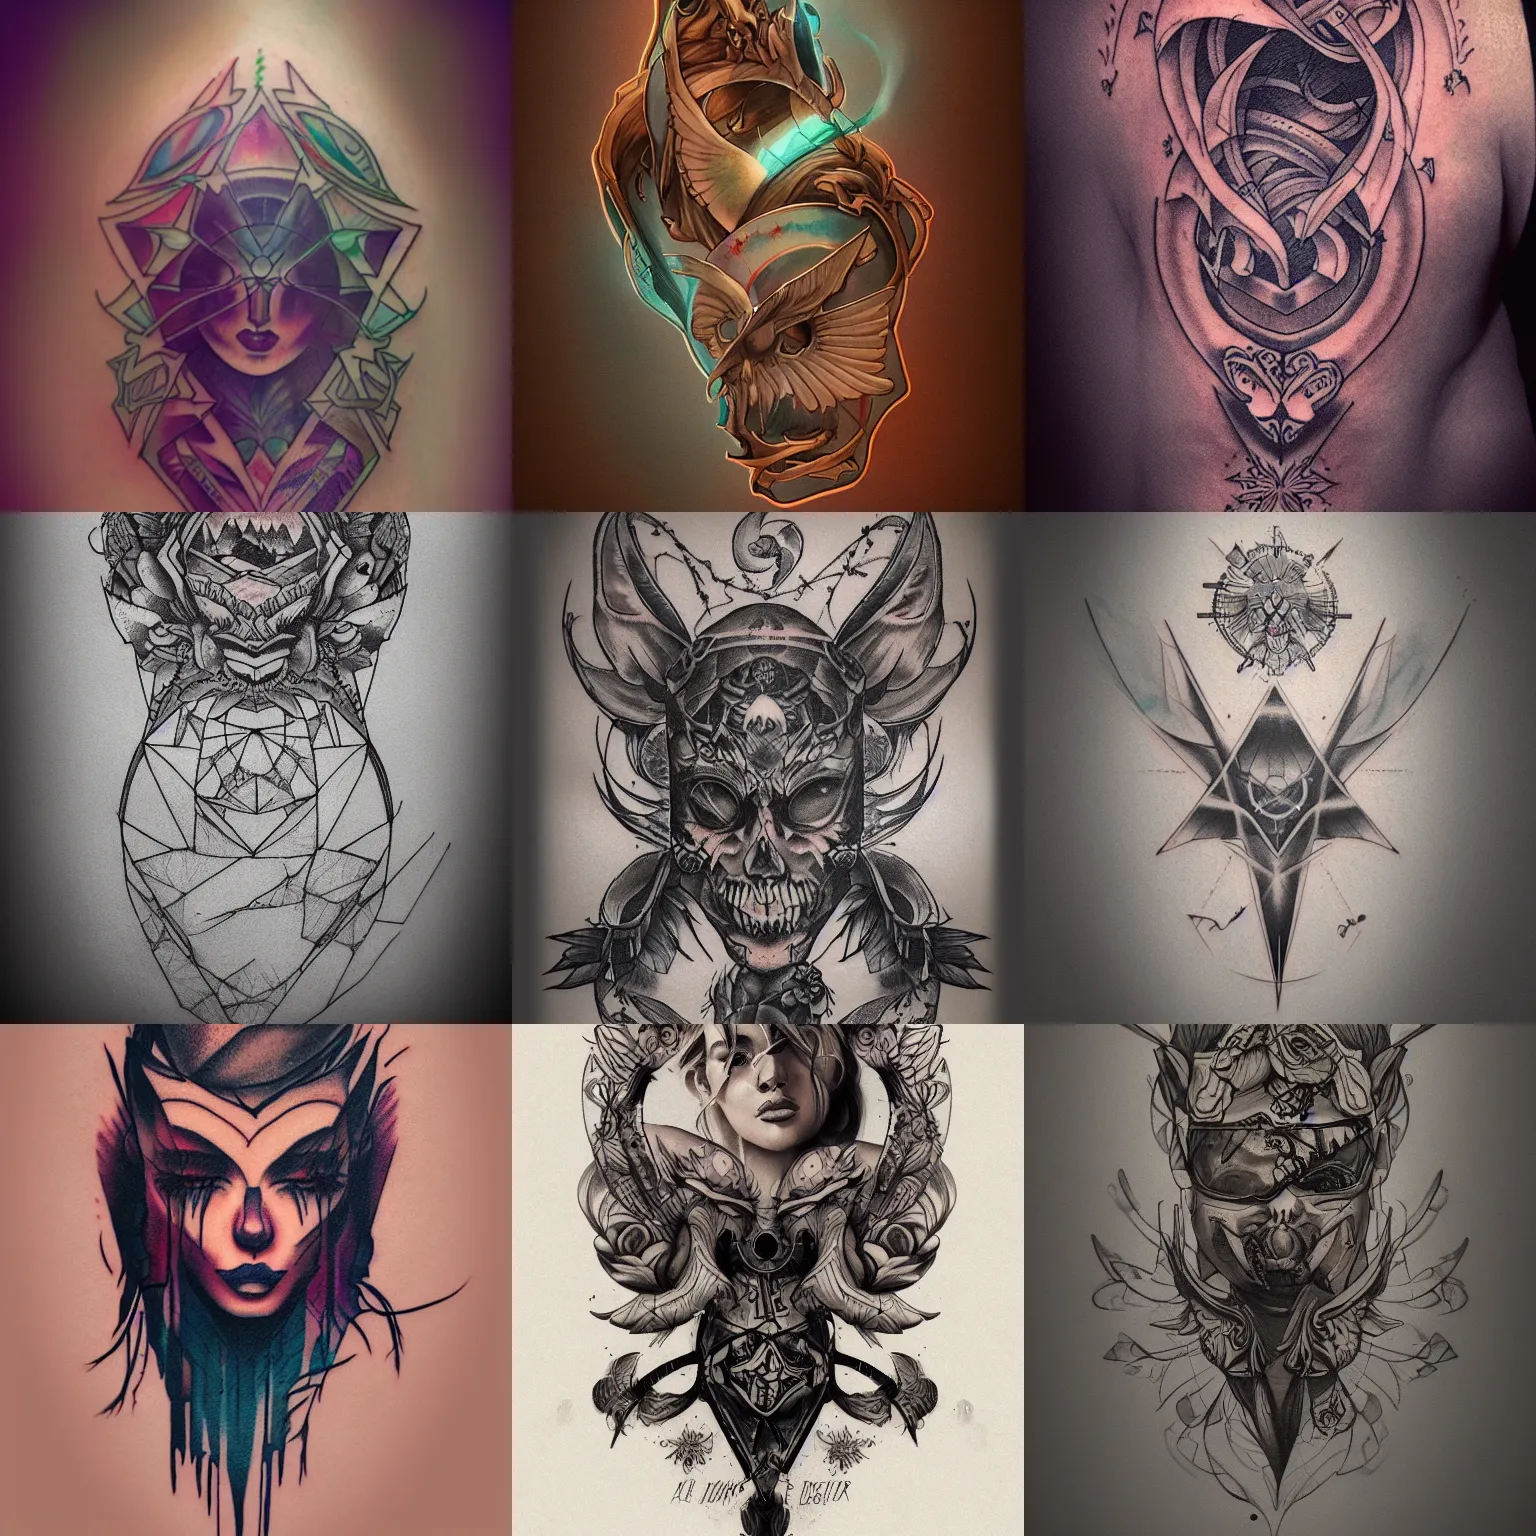 Sophie Fisher - Digital tattoo designs